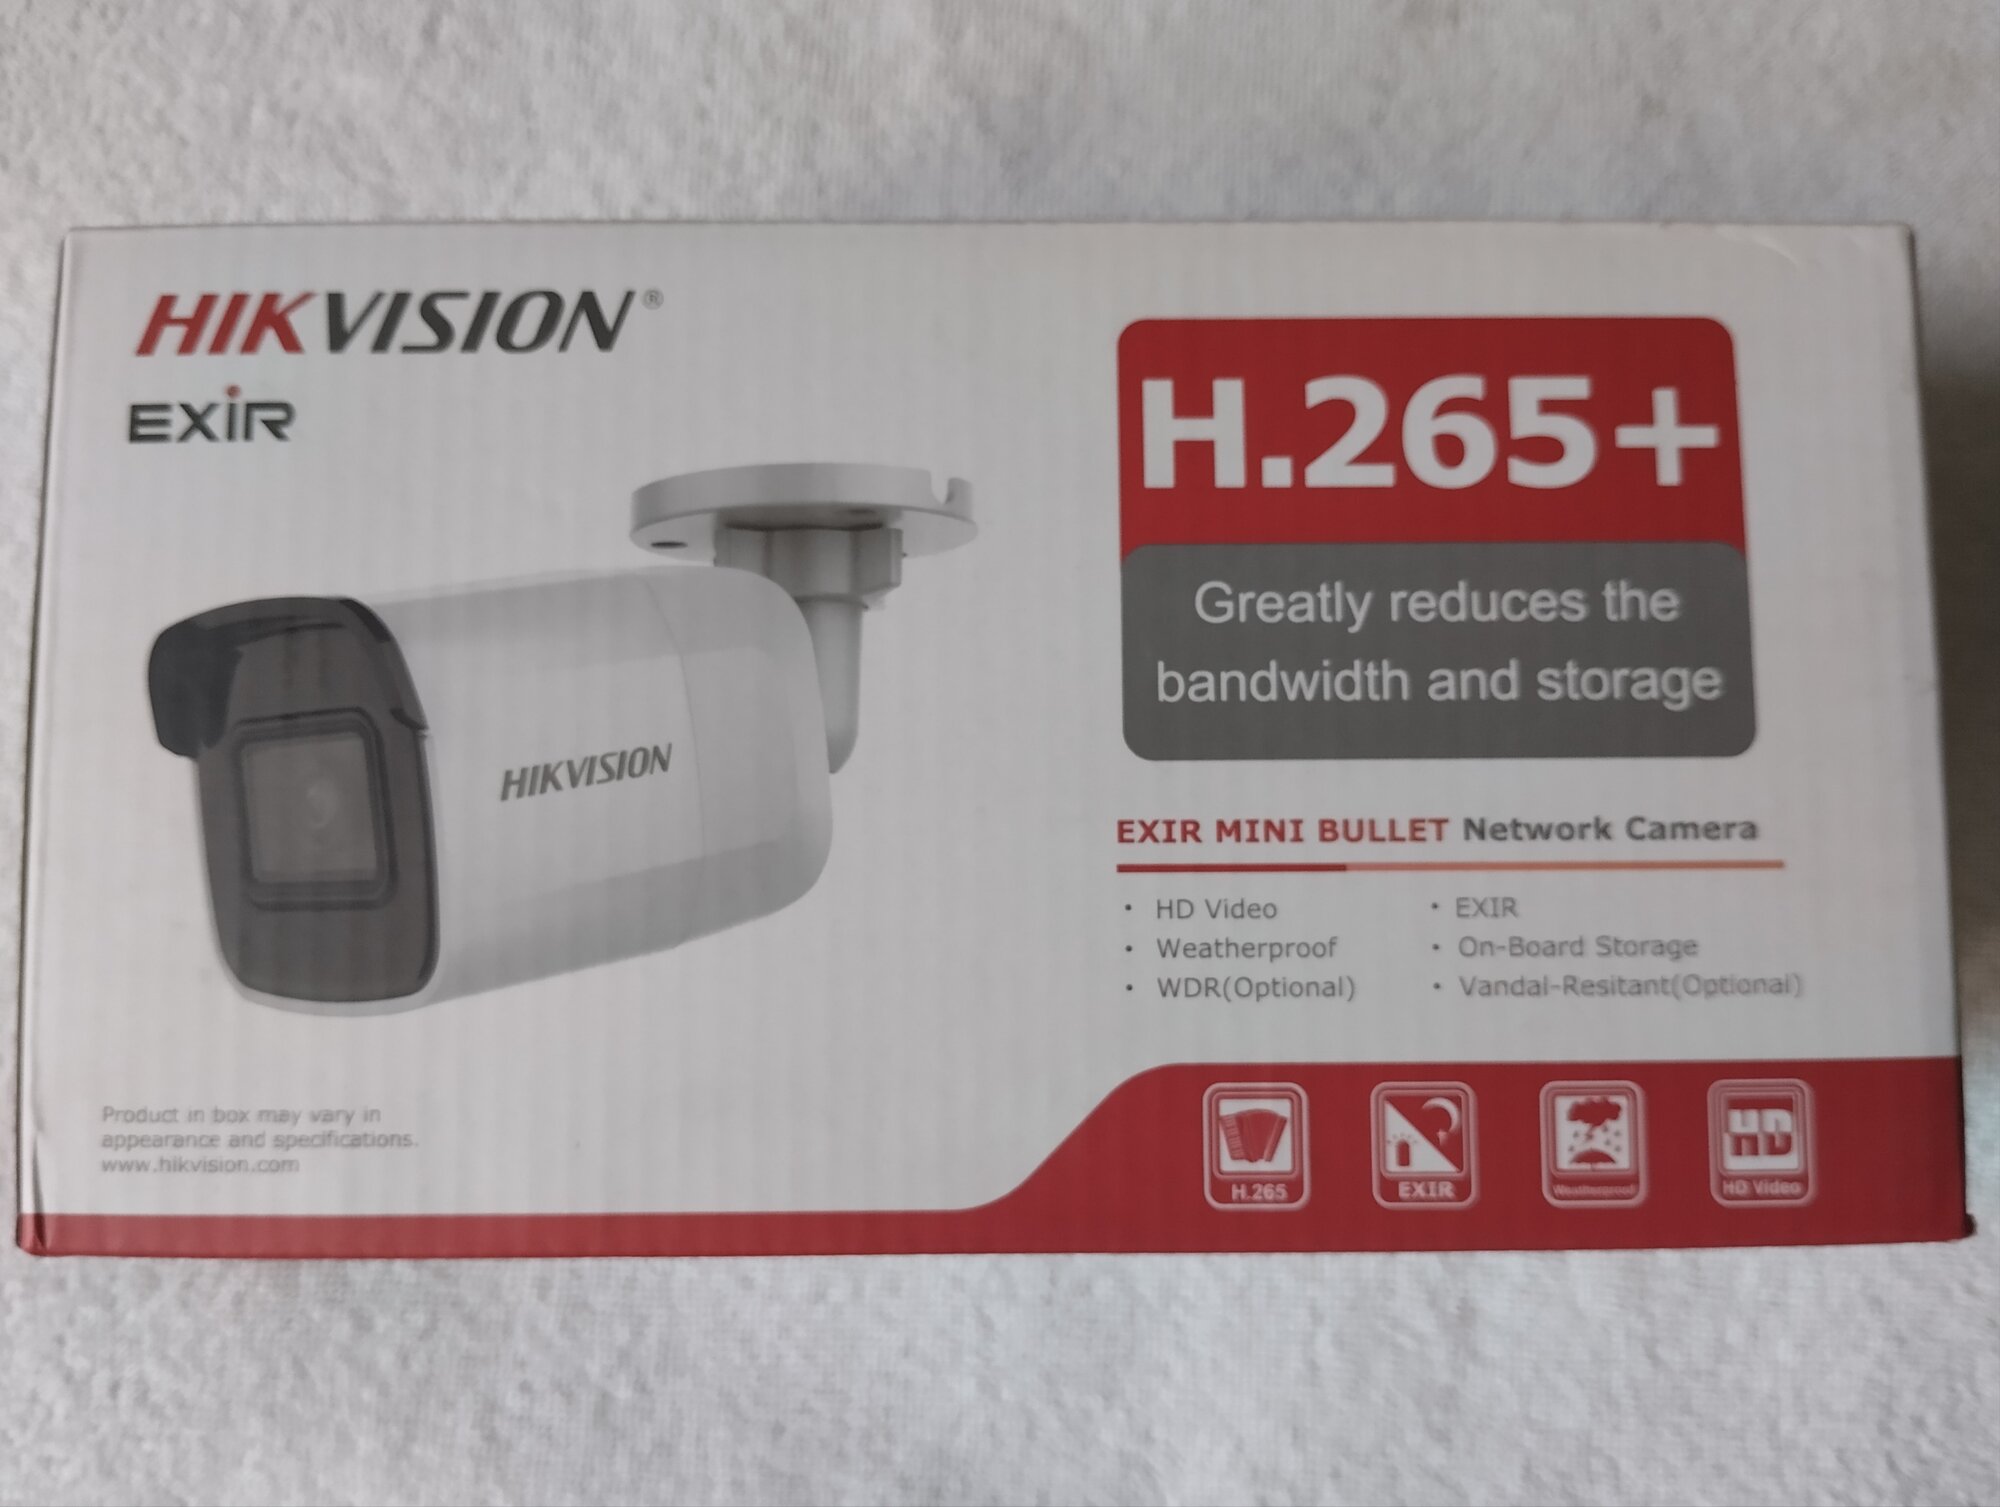 IP-камера Hikvision DS-2CD2023G0E-I(B)(2.8mm)